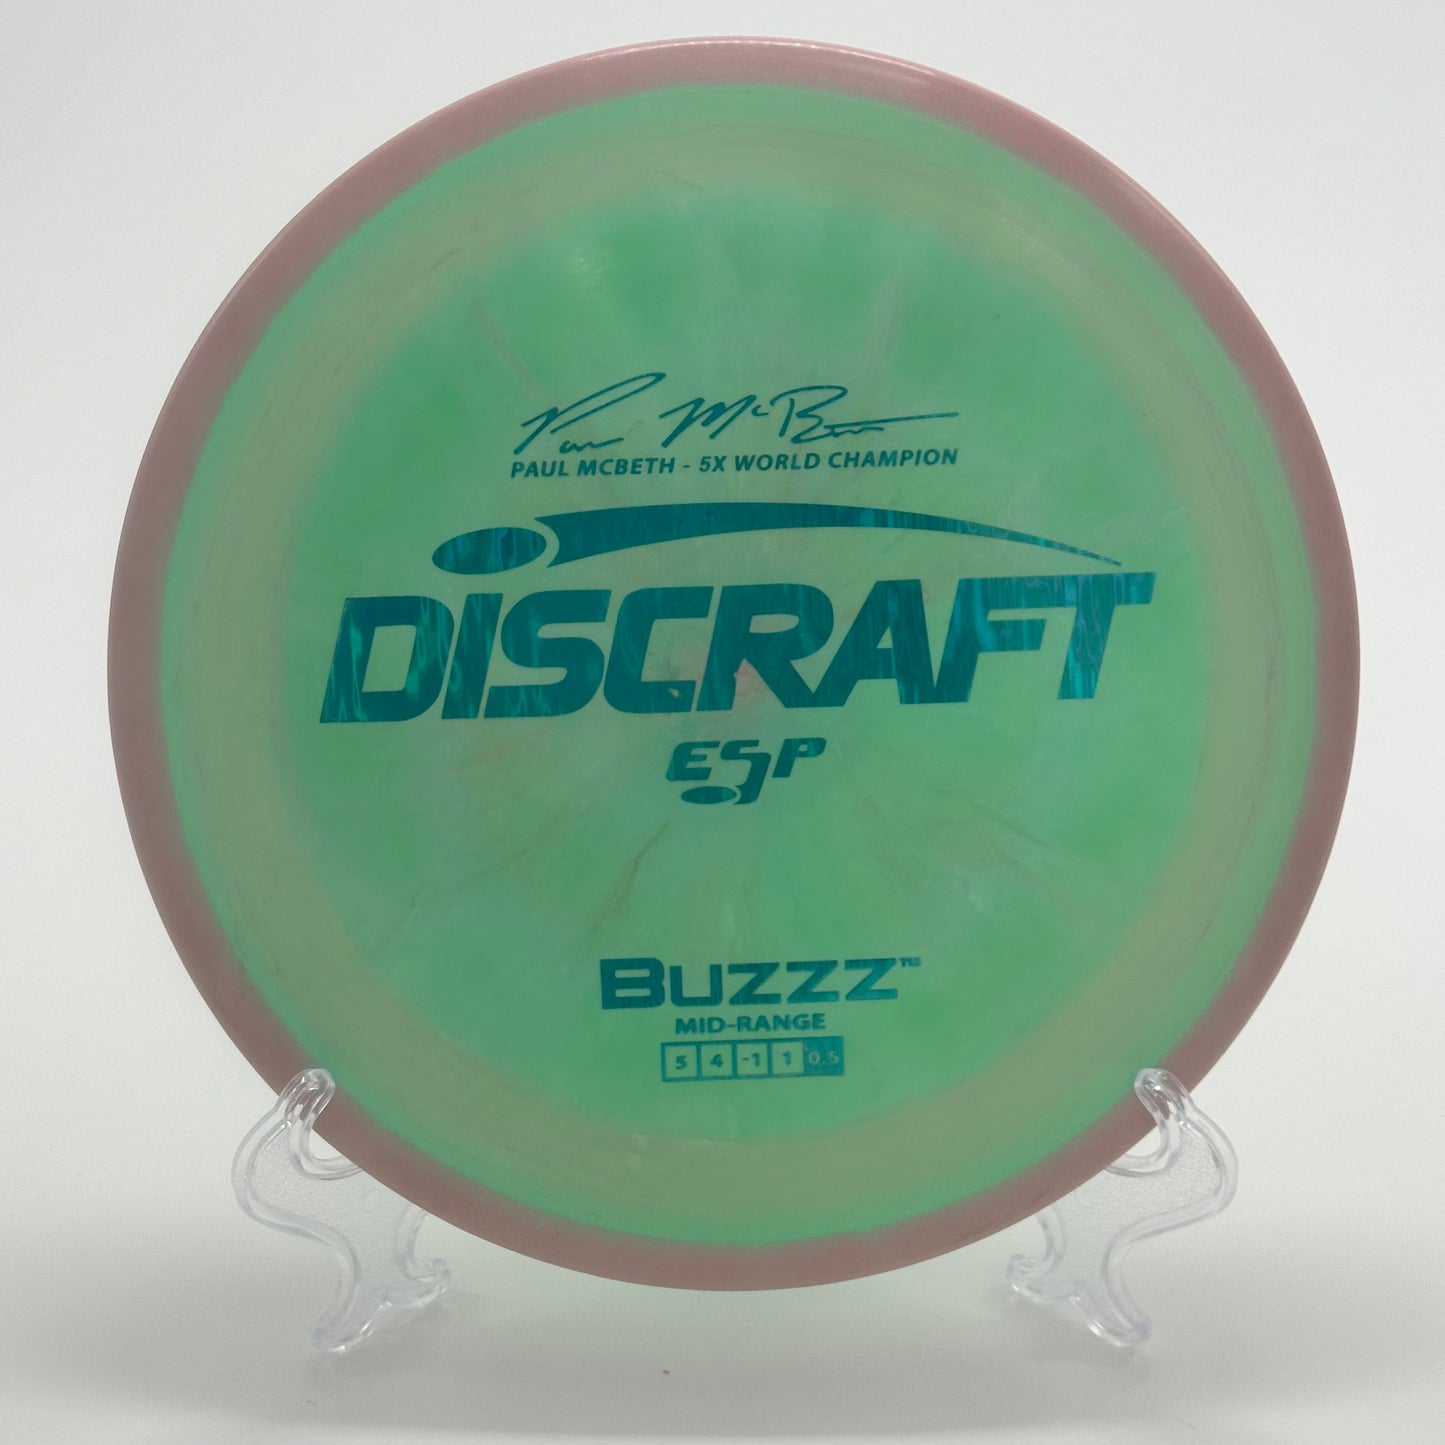 Discraft Buzzz | ESP Paul Mcbeth 5x World Champion Watermelon